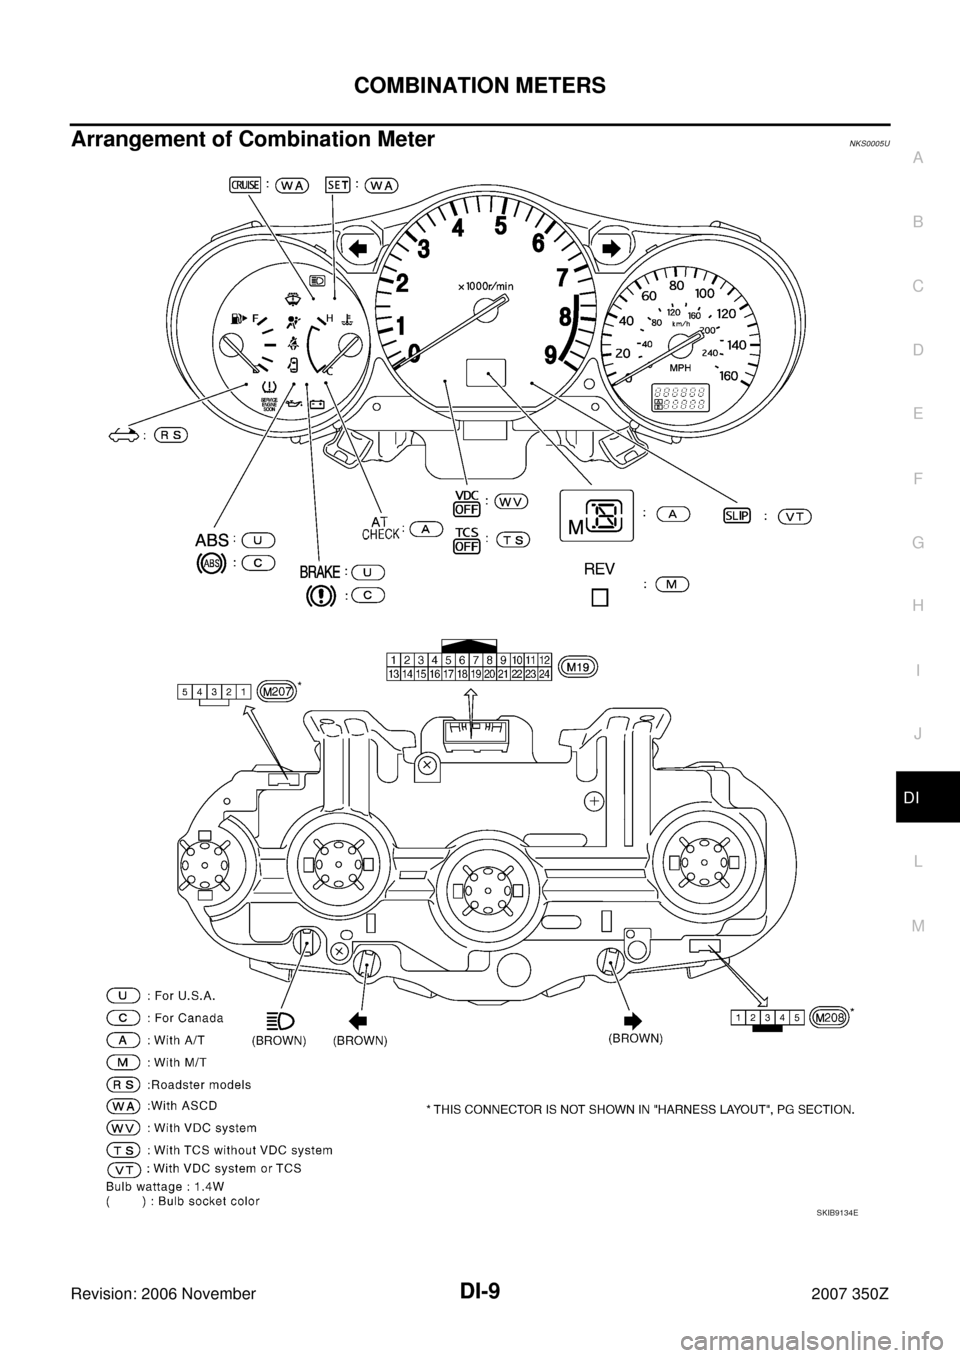 NISSAN 350Z 2007 Z33 Driver Information Manual COMBINATION METERS
DI-9
C
D
E
F
G
H
I
J
L
MA
B
DI
Revision: 2006 November2007 350Z
Arrangement of Combination MeterNKS0005U
SKIB9134E 